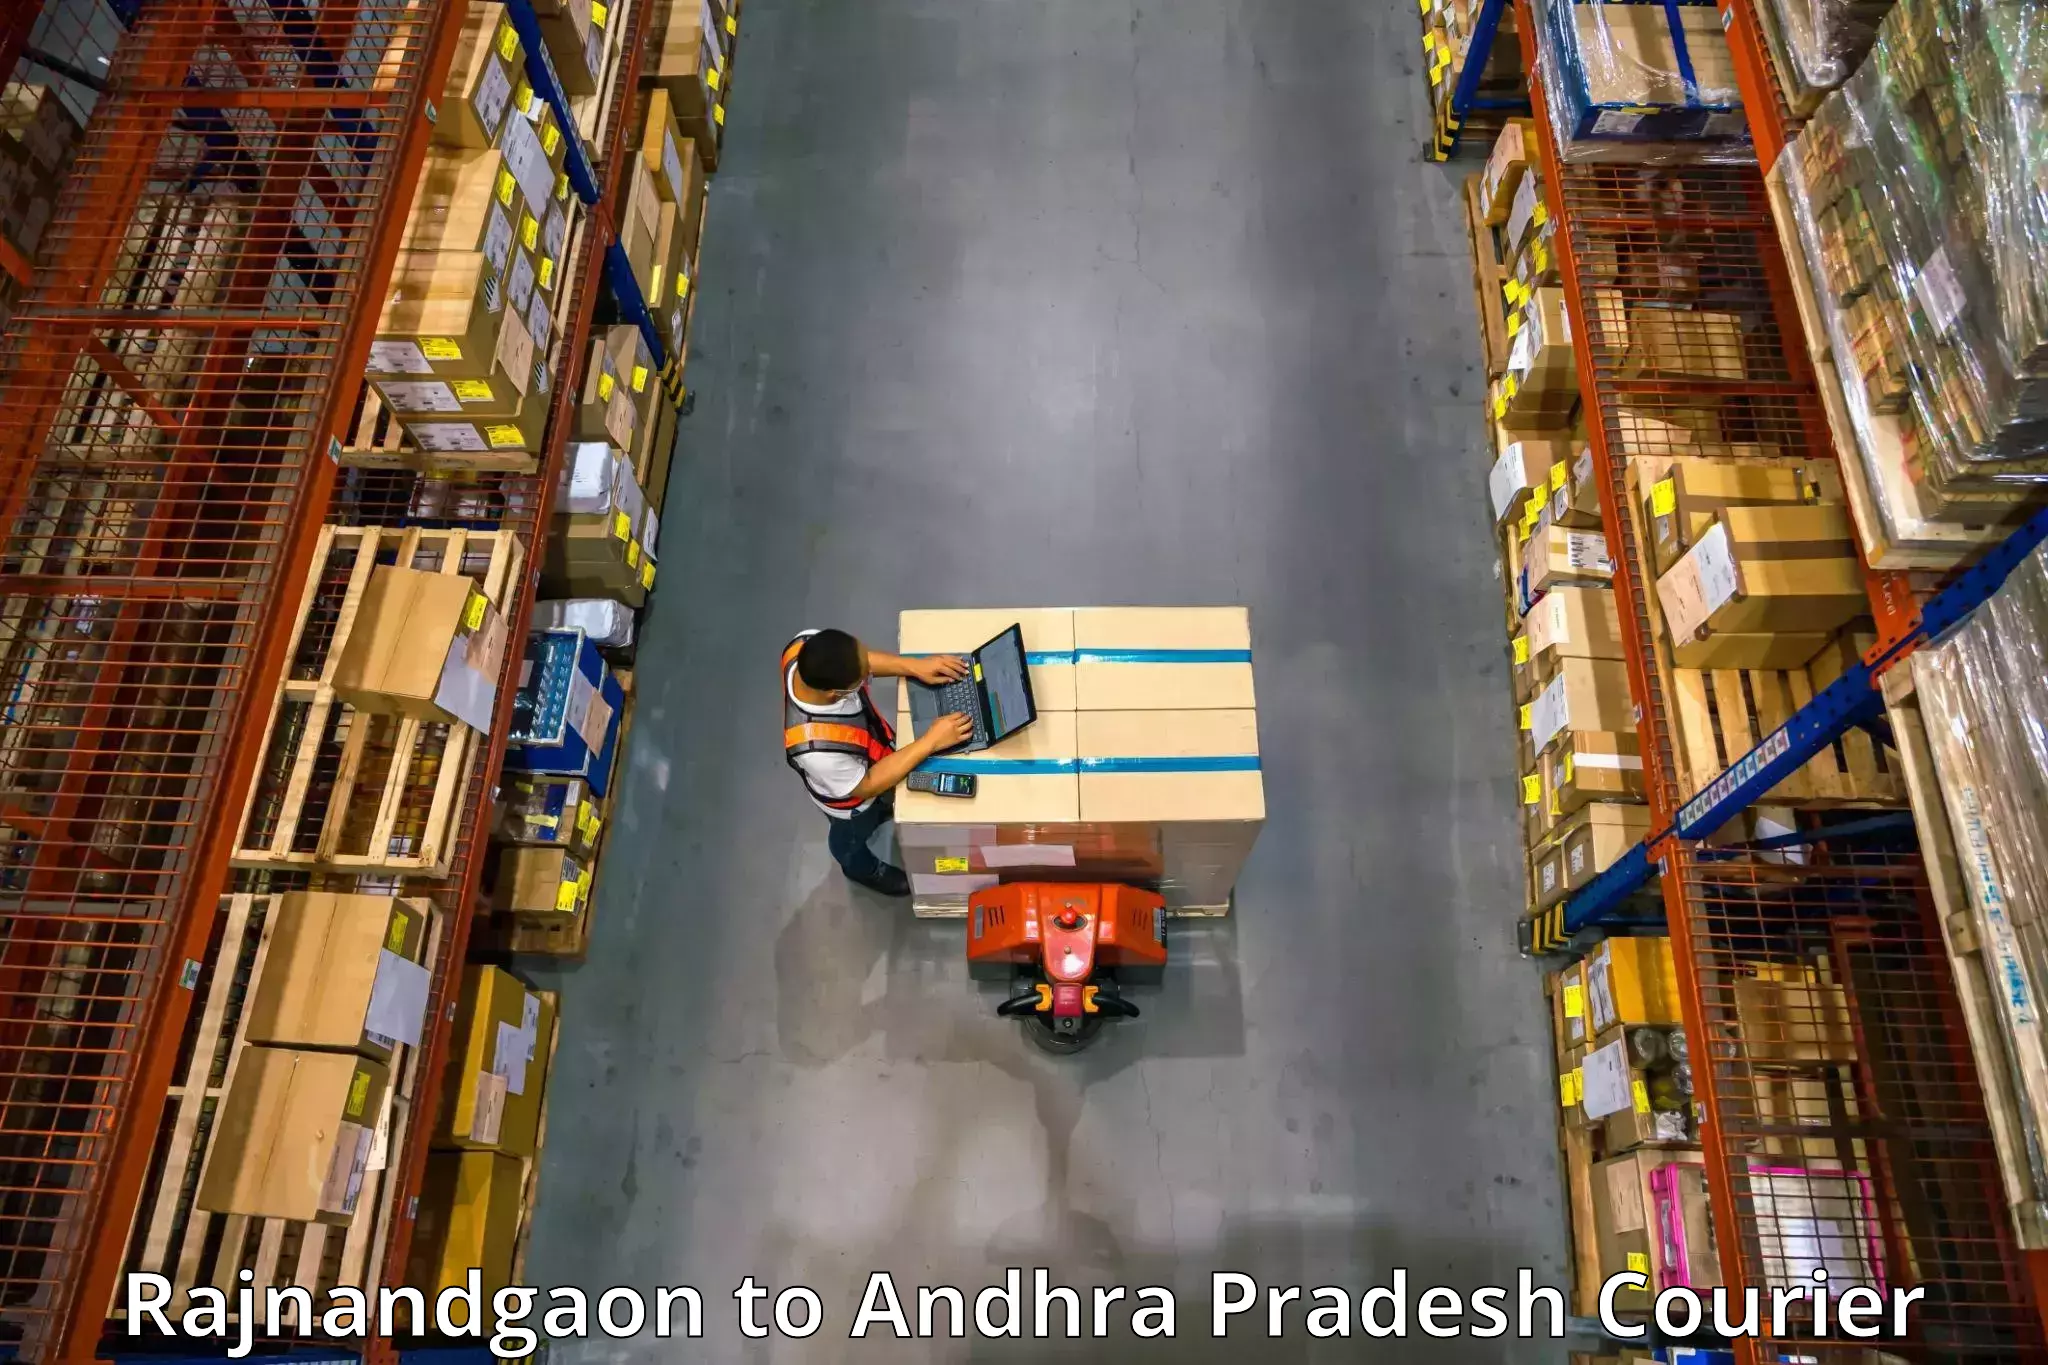 Furniture relocation experts Rajnandgaon to Andhra Pradesh